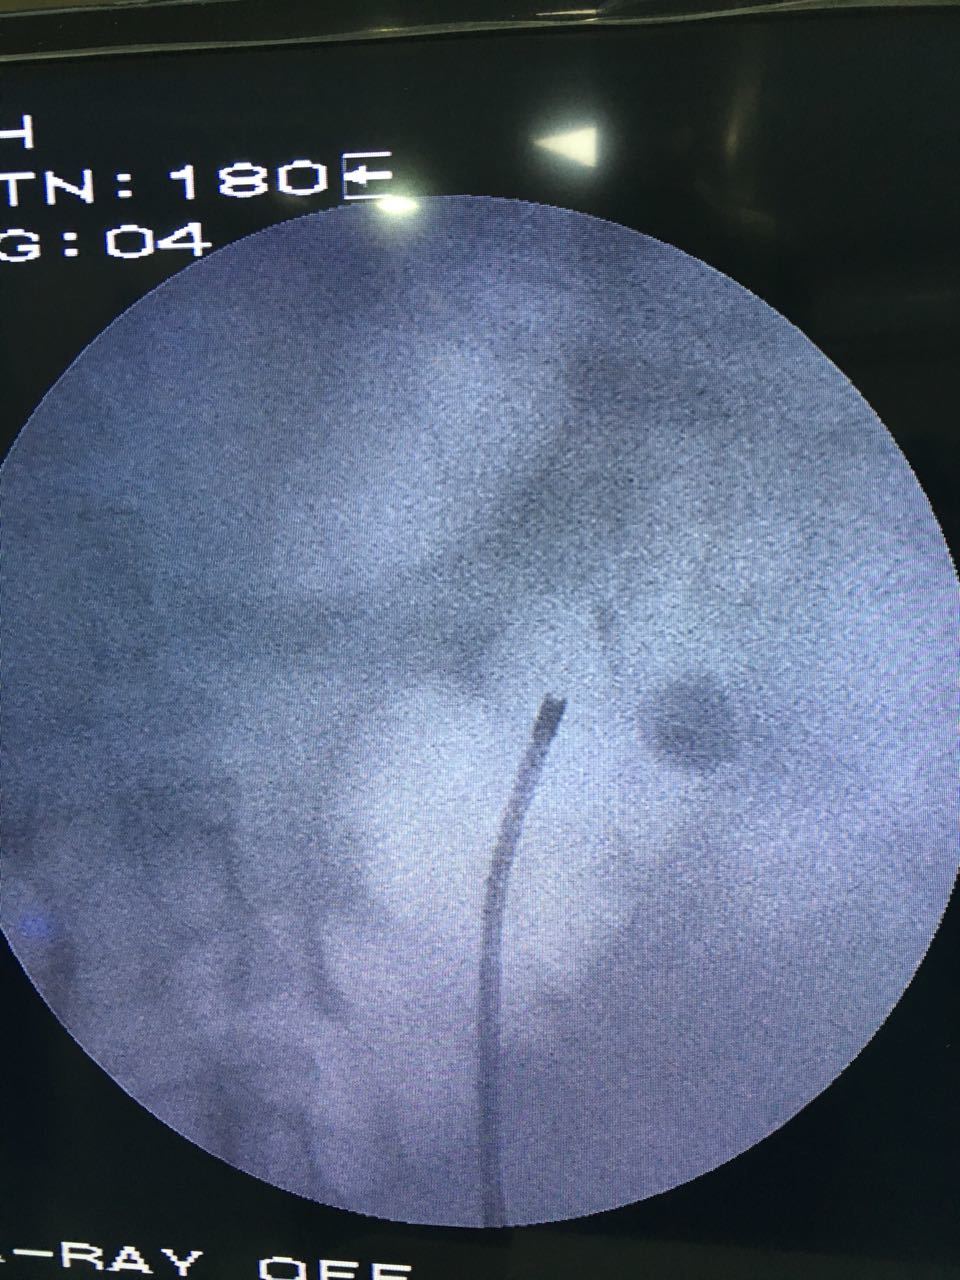 Flexible Ureteroscopy using high watt LASER for large burden kidney stone